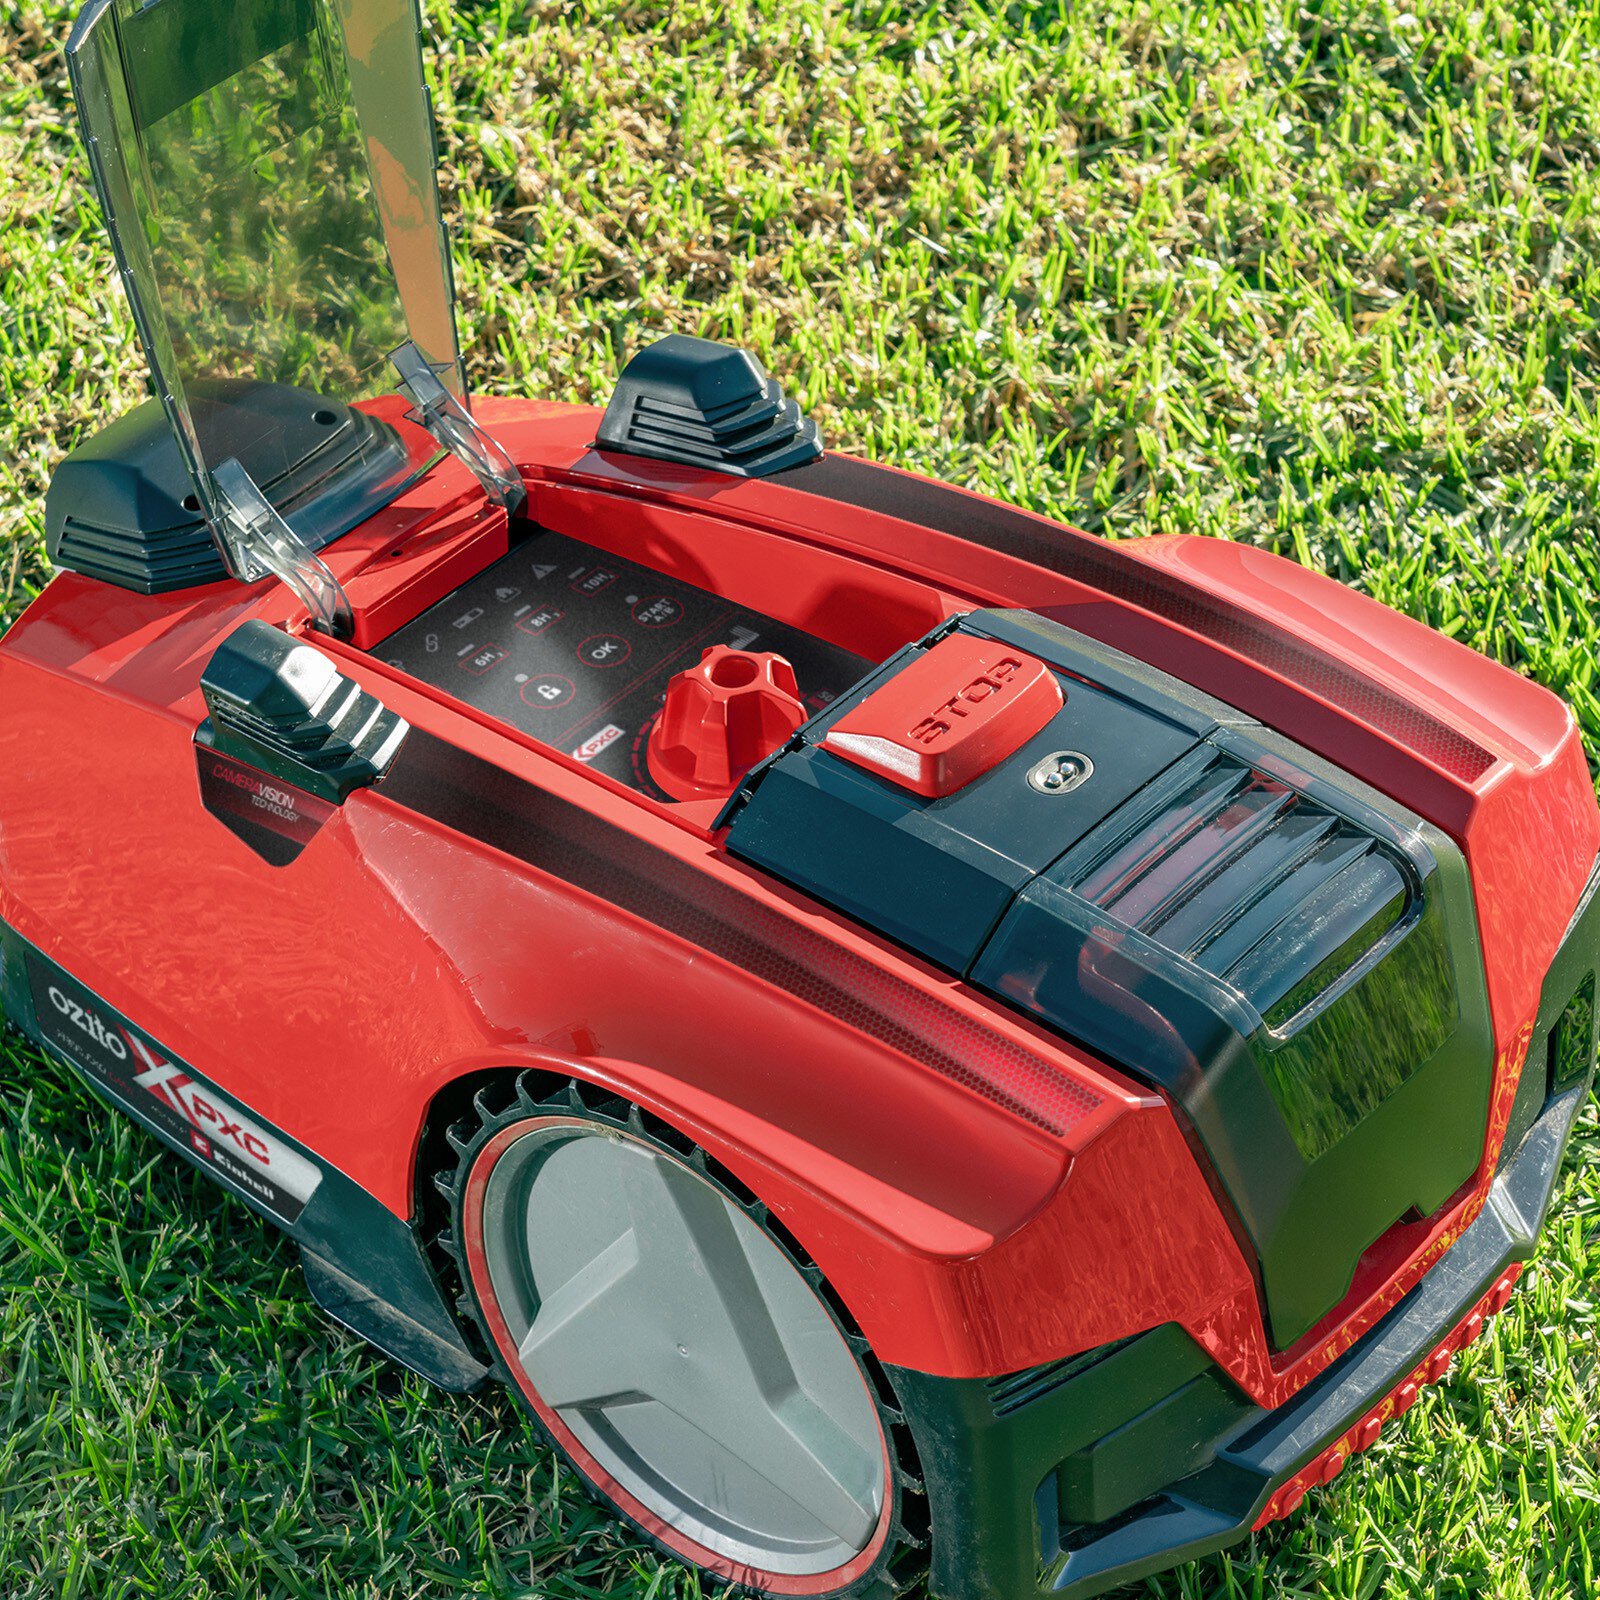 ozito-robot-lawn-mower-3001047-detail_image-105